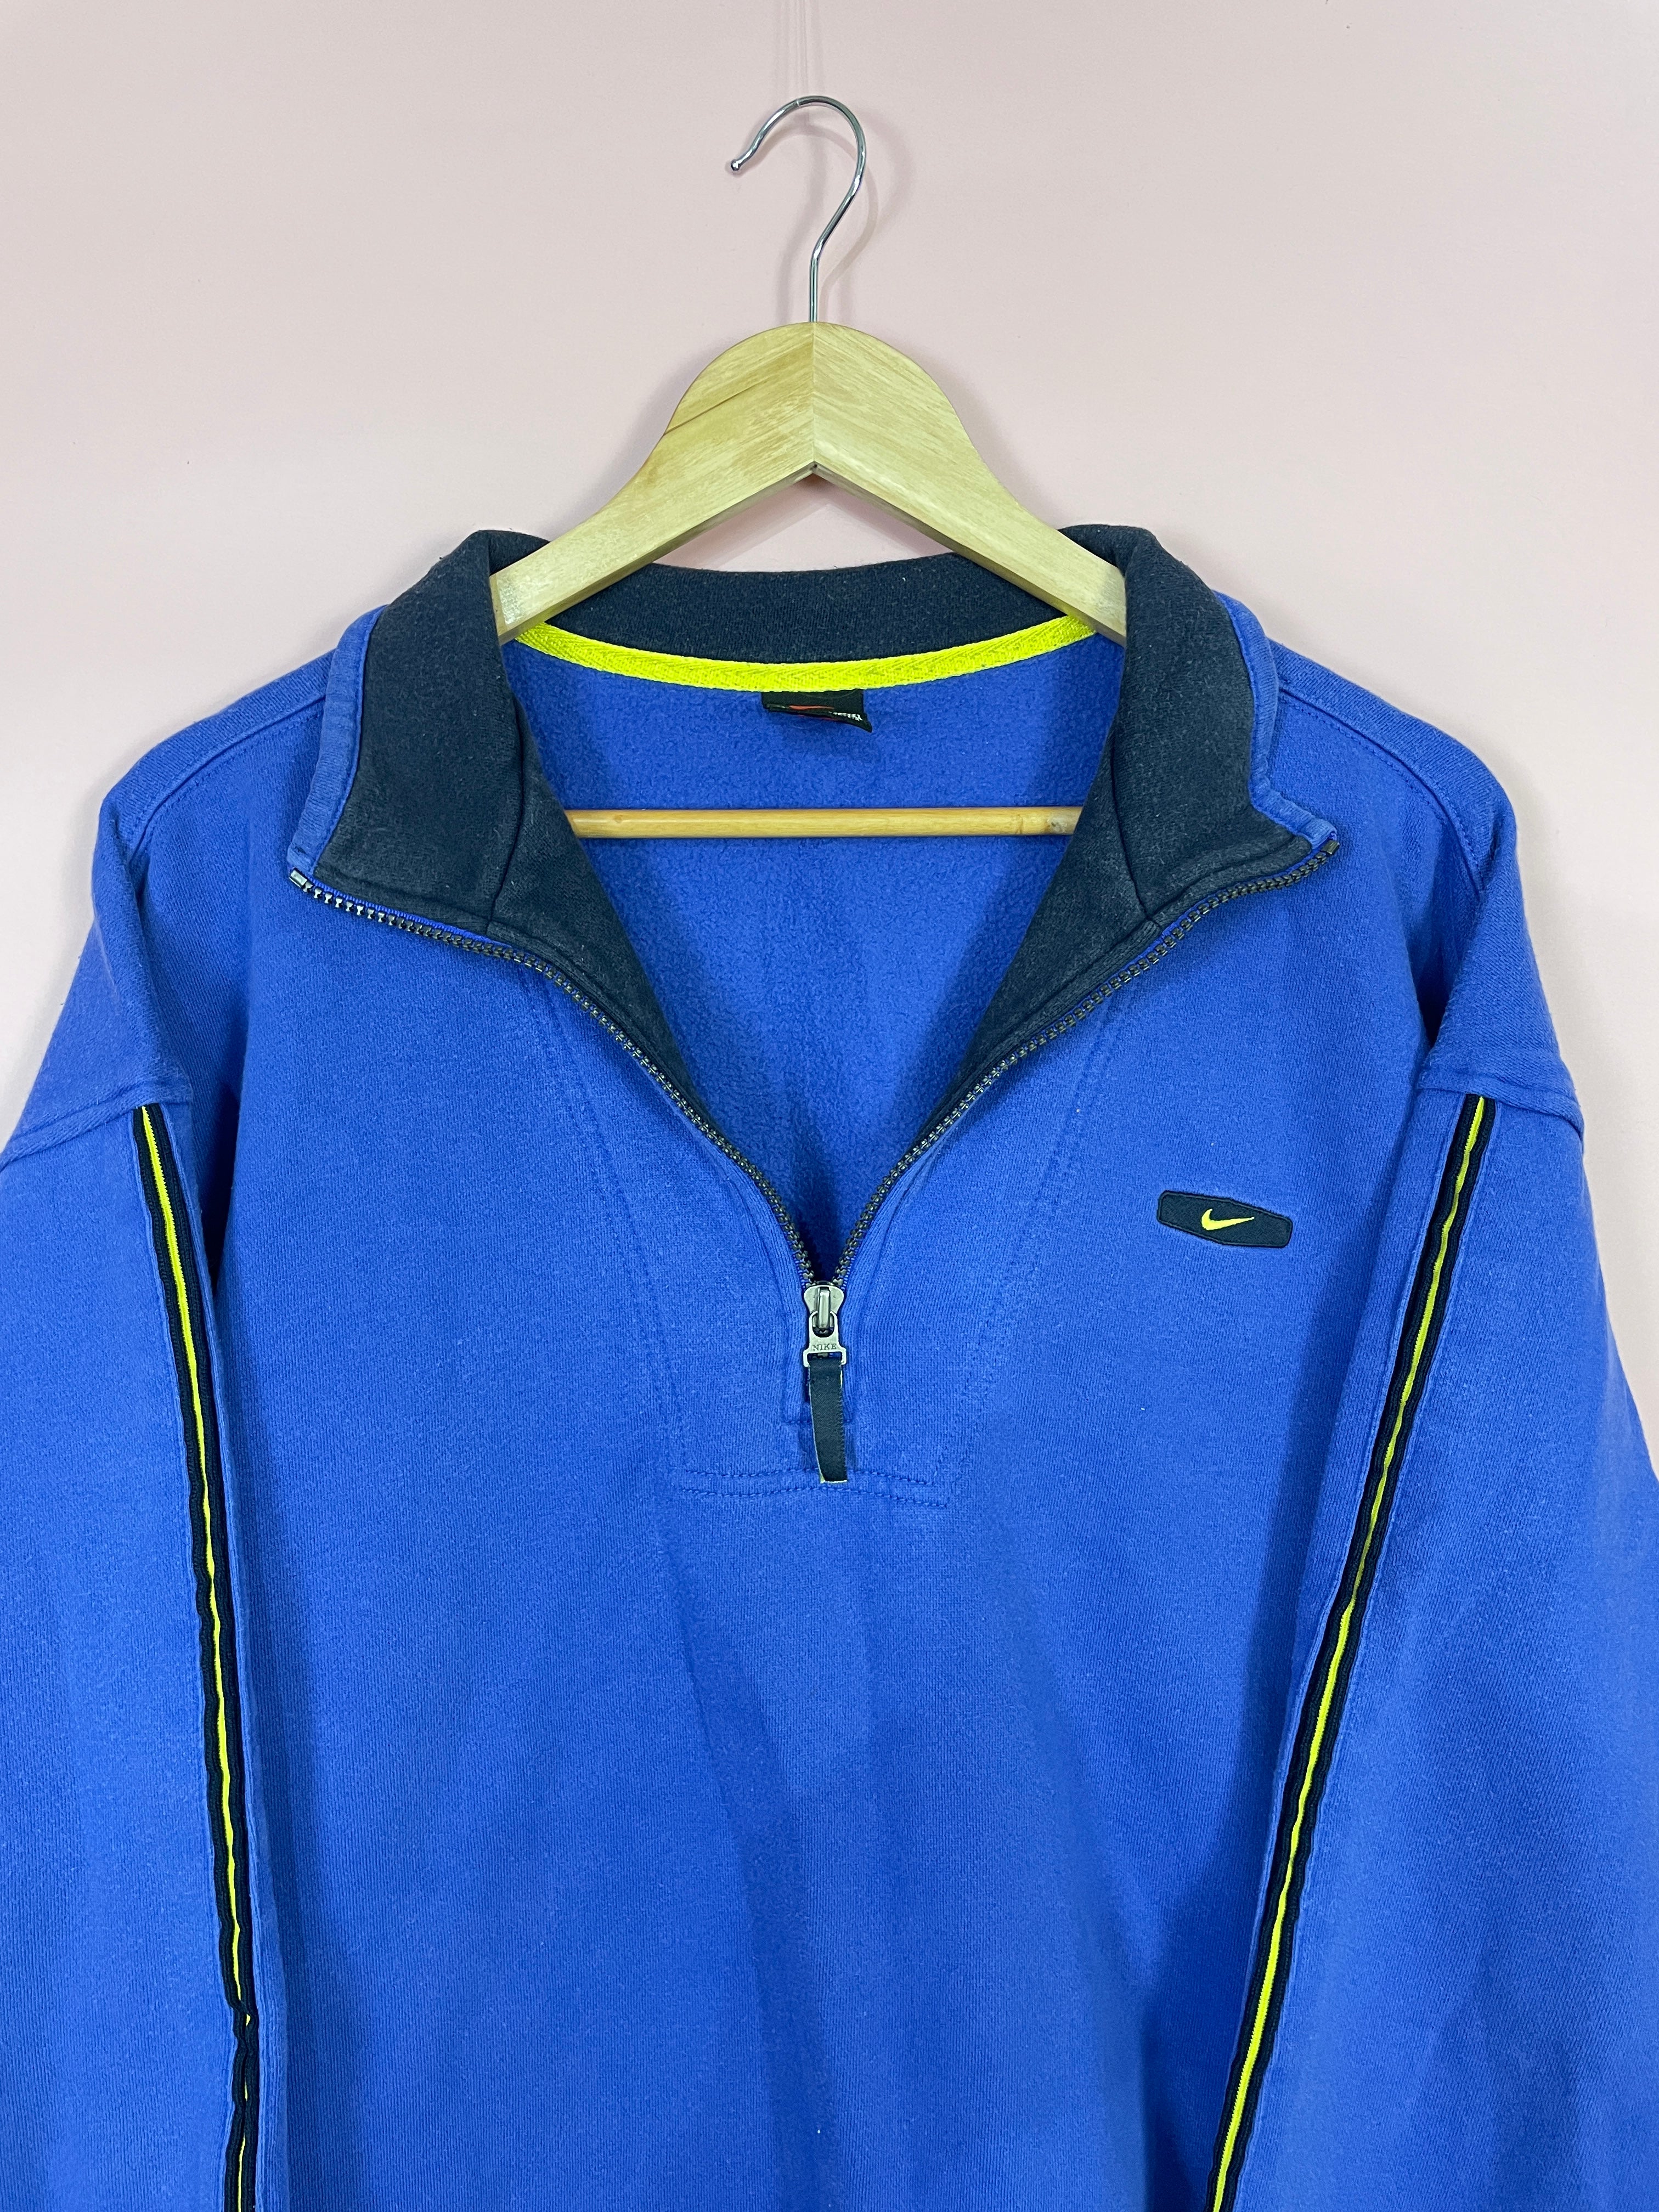 L Nike Sweater blau/gelb